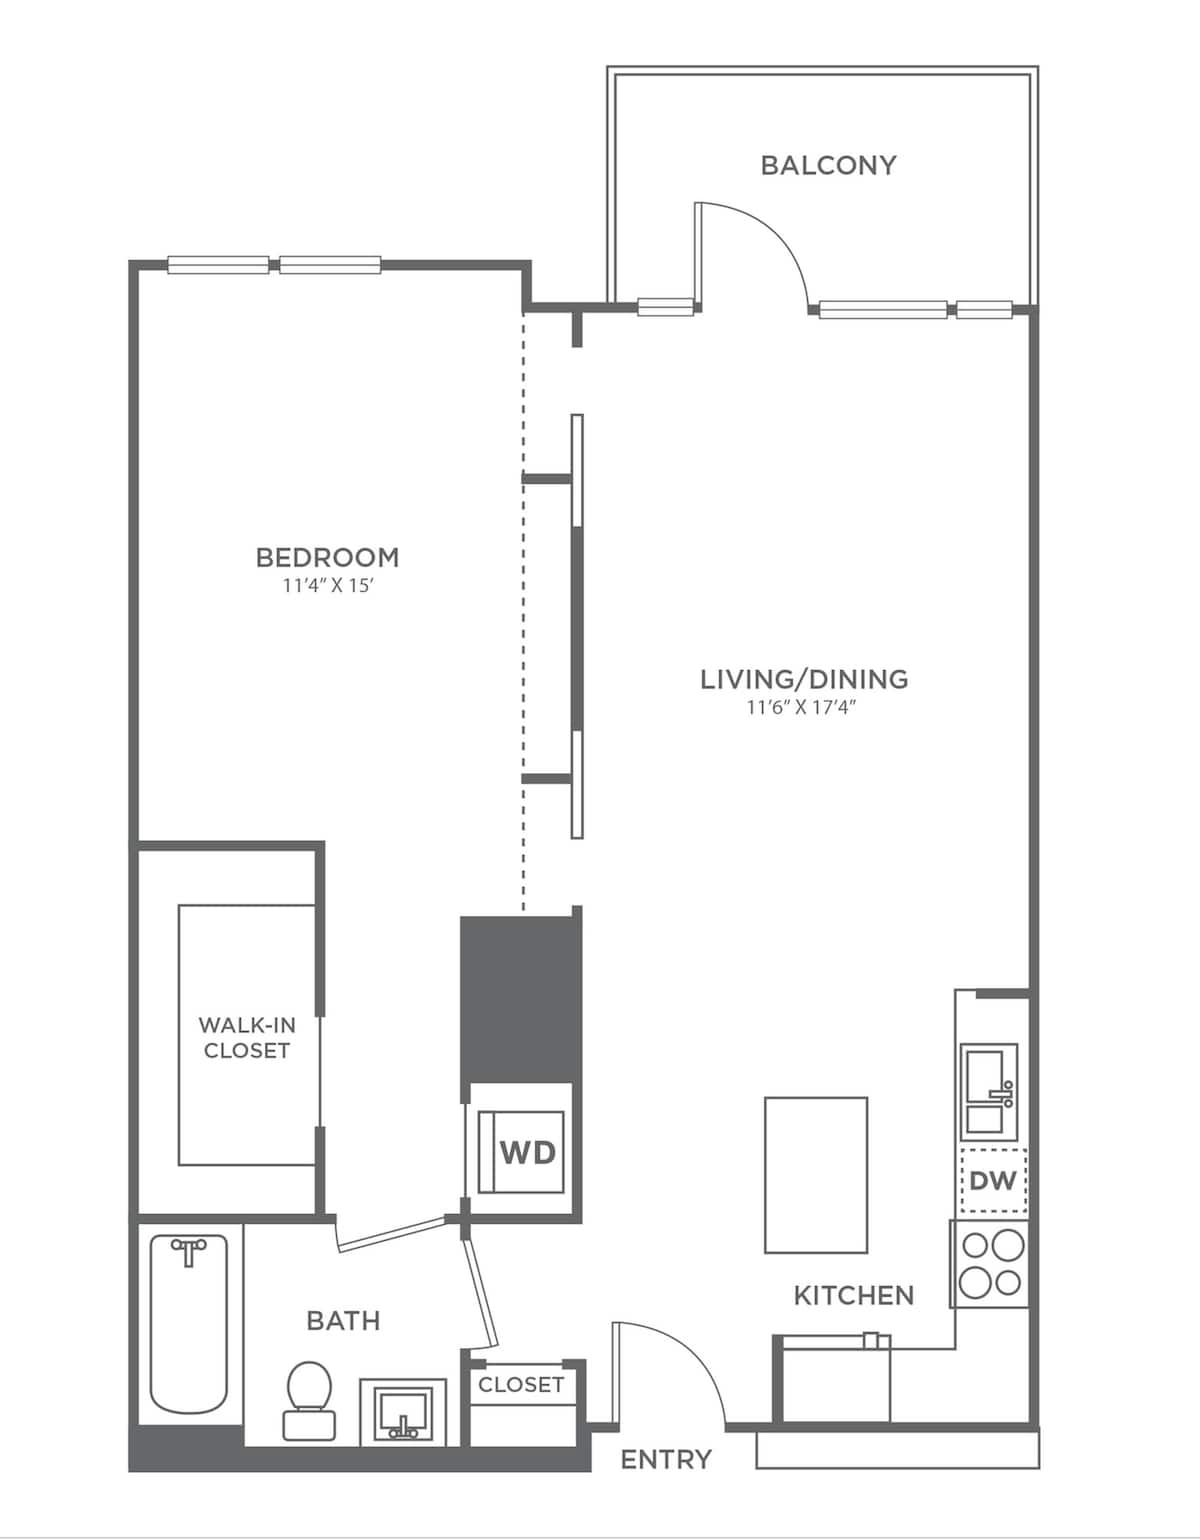 Floorplan diagram for One Bedroom One Bath (740 SF), showing 1 bedroom